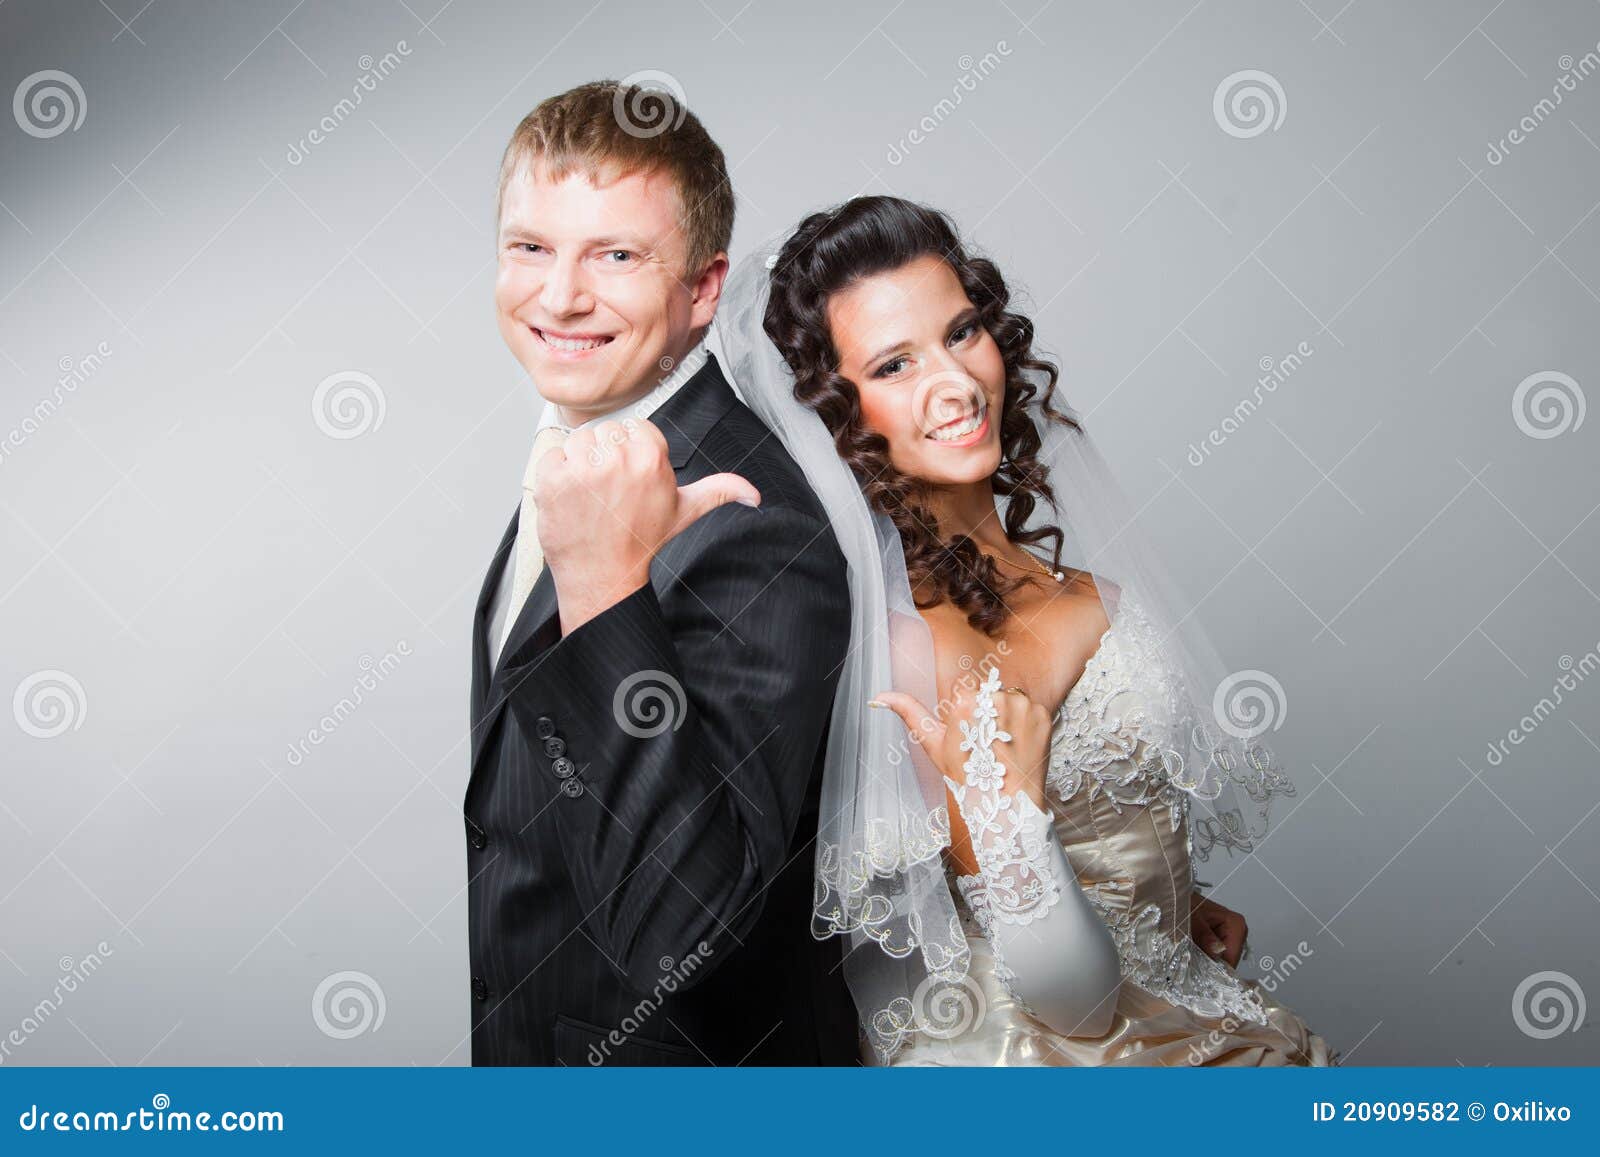 gesticulating bride and groom